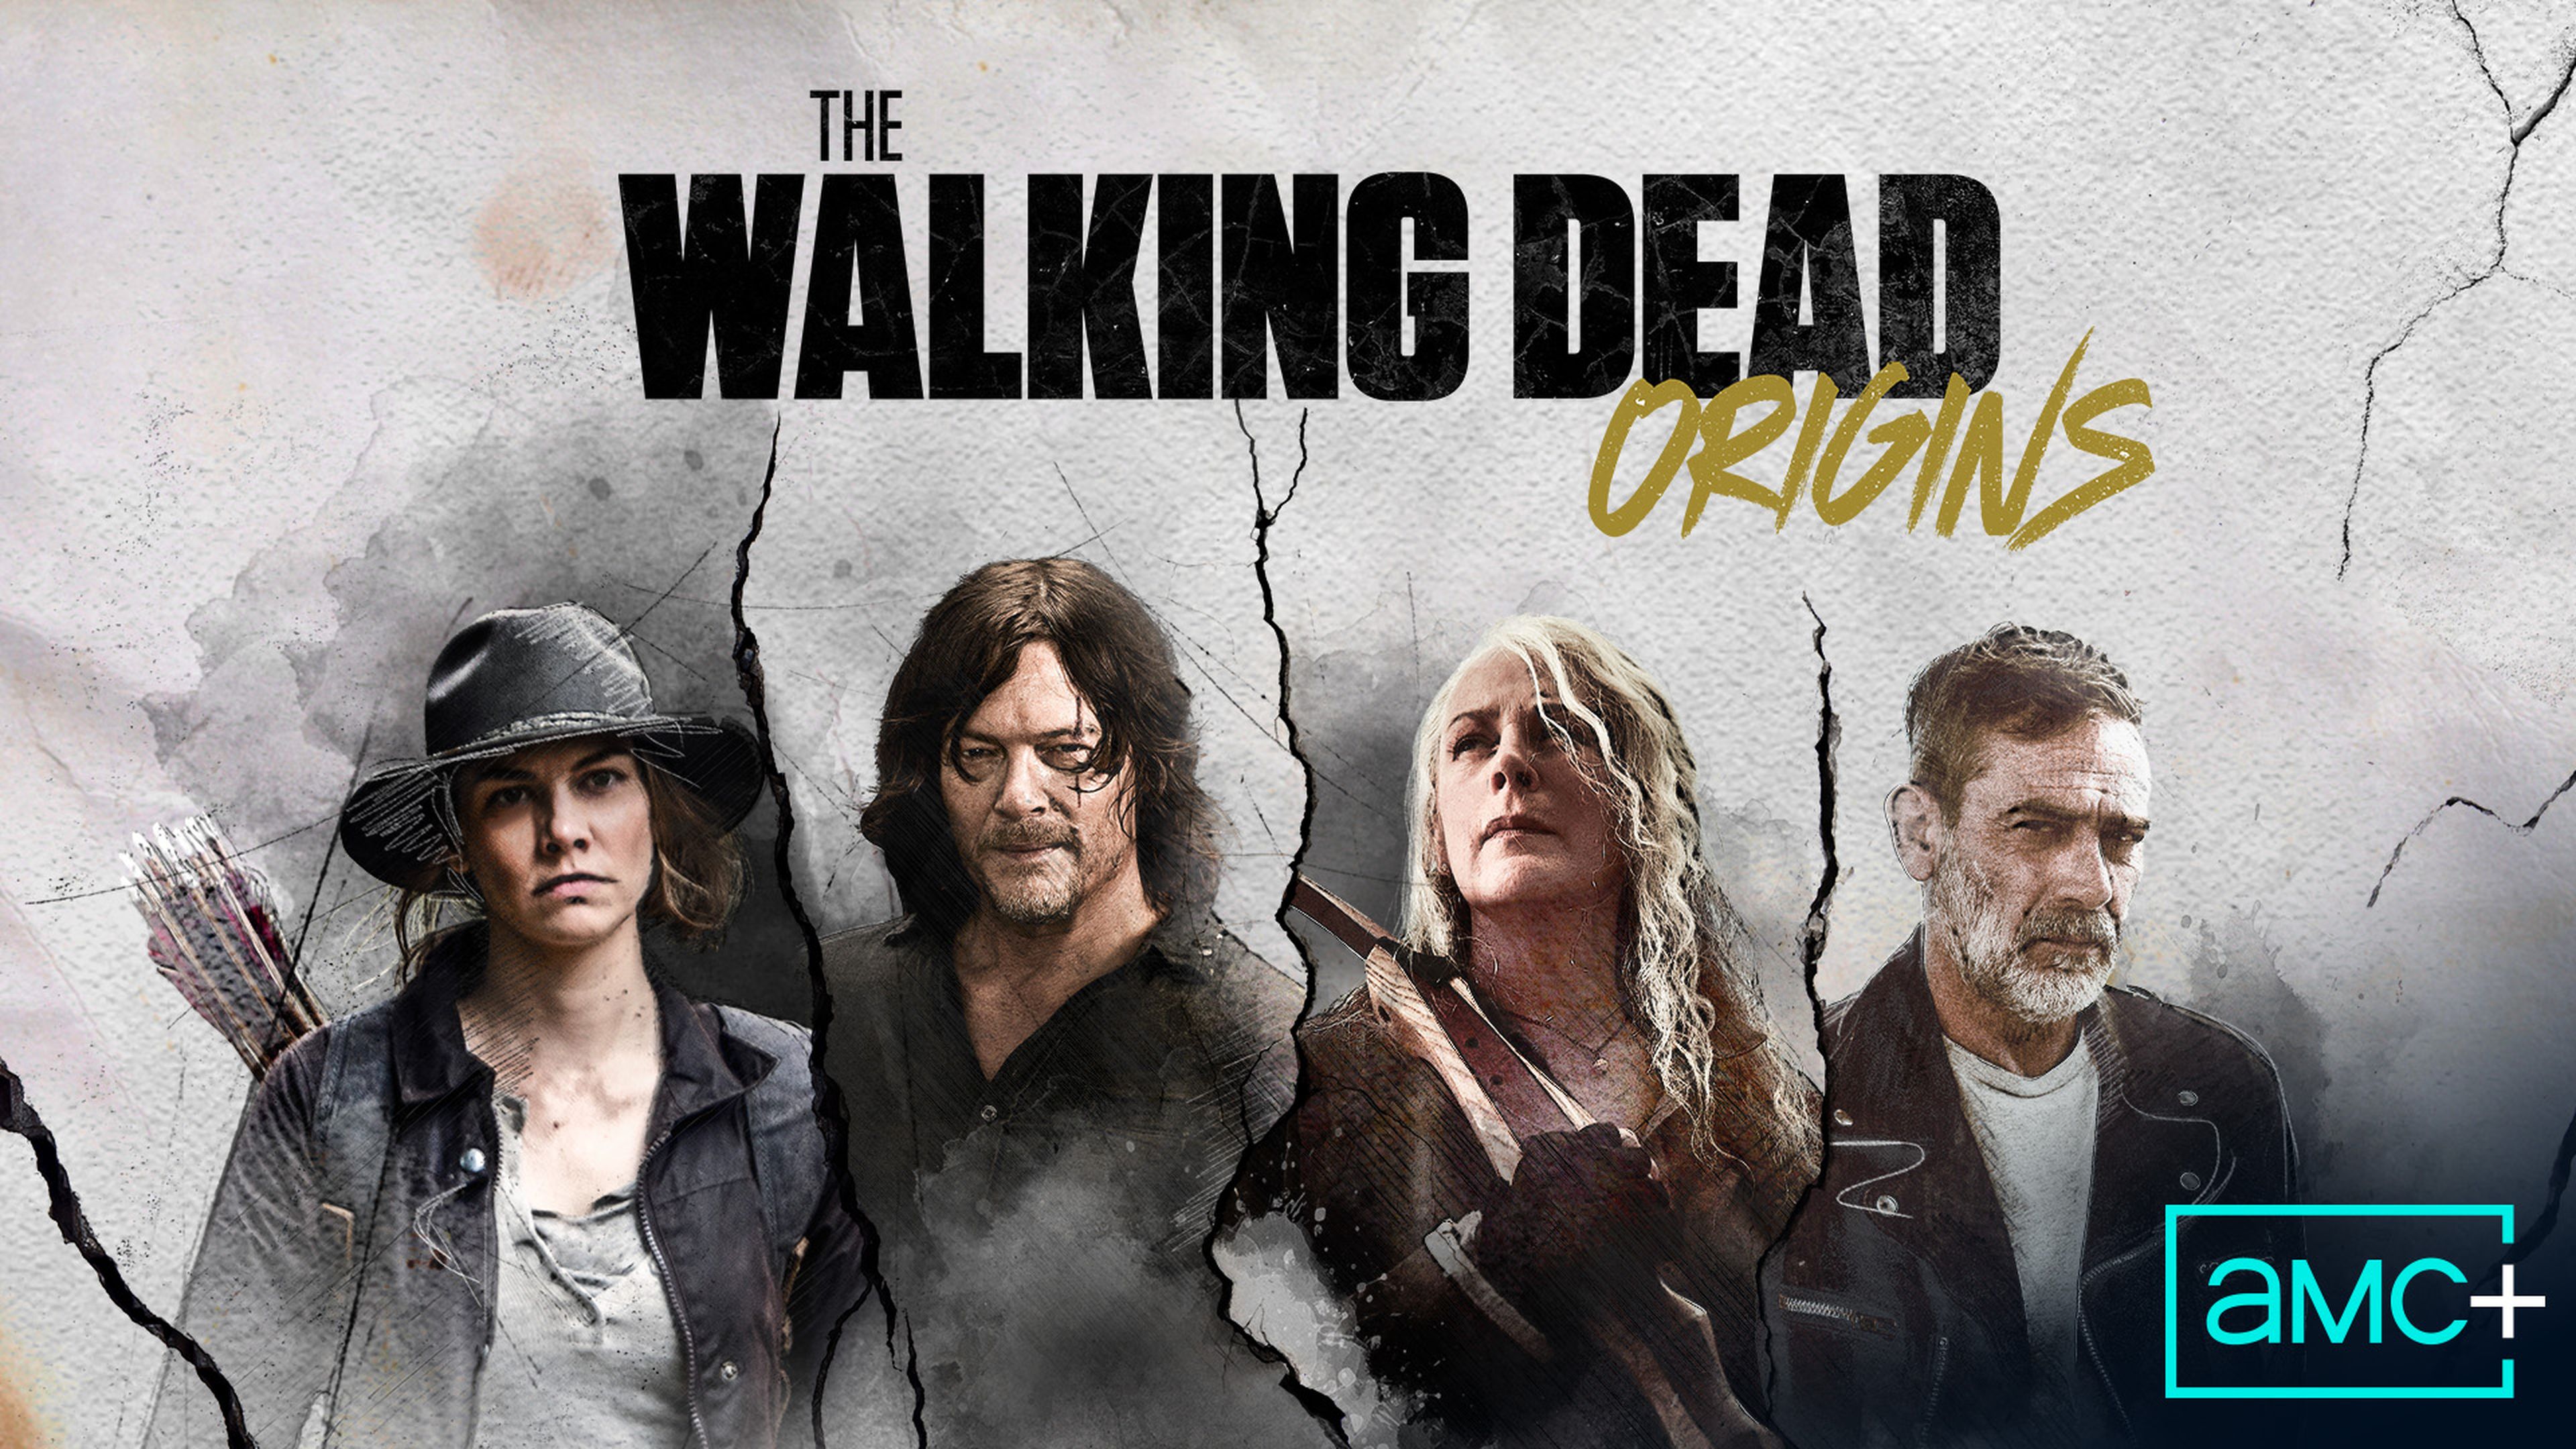 The Walking Dead Origins AMC+